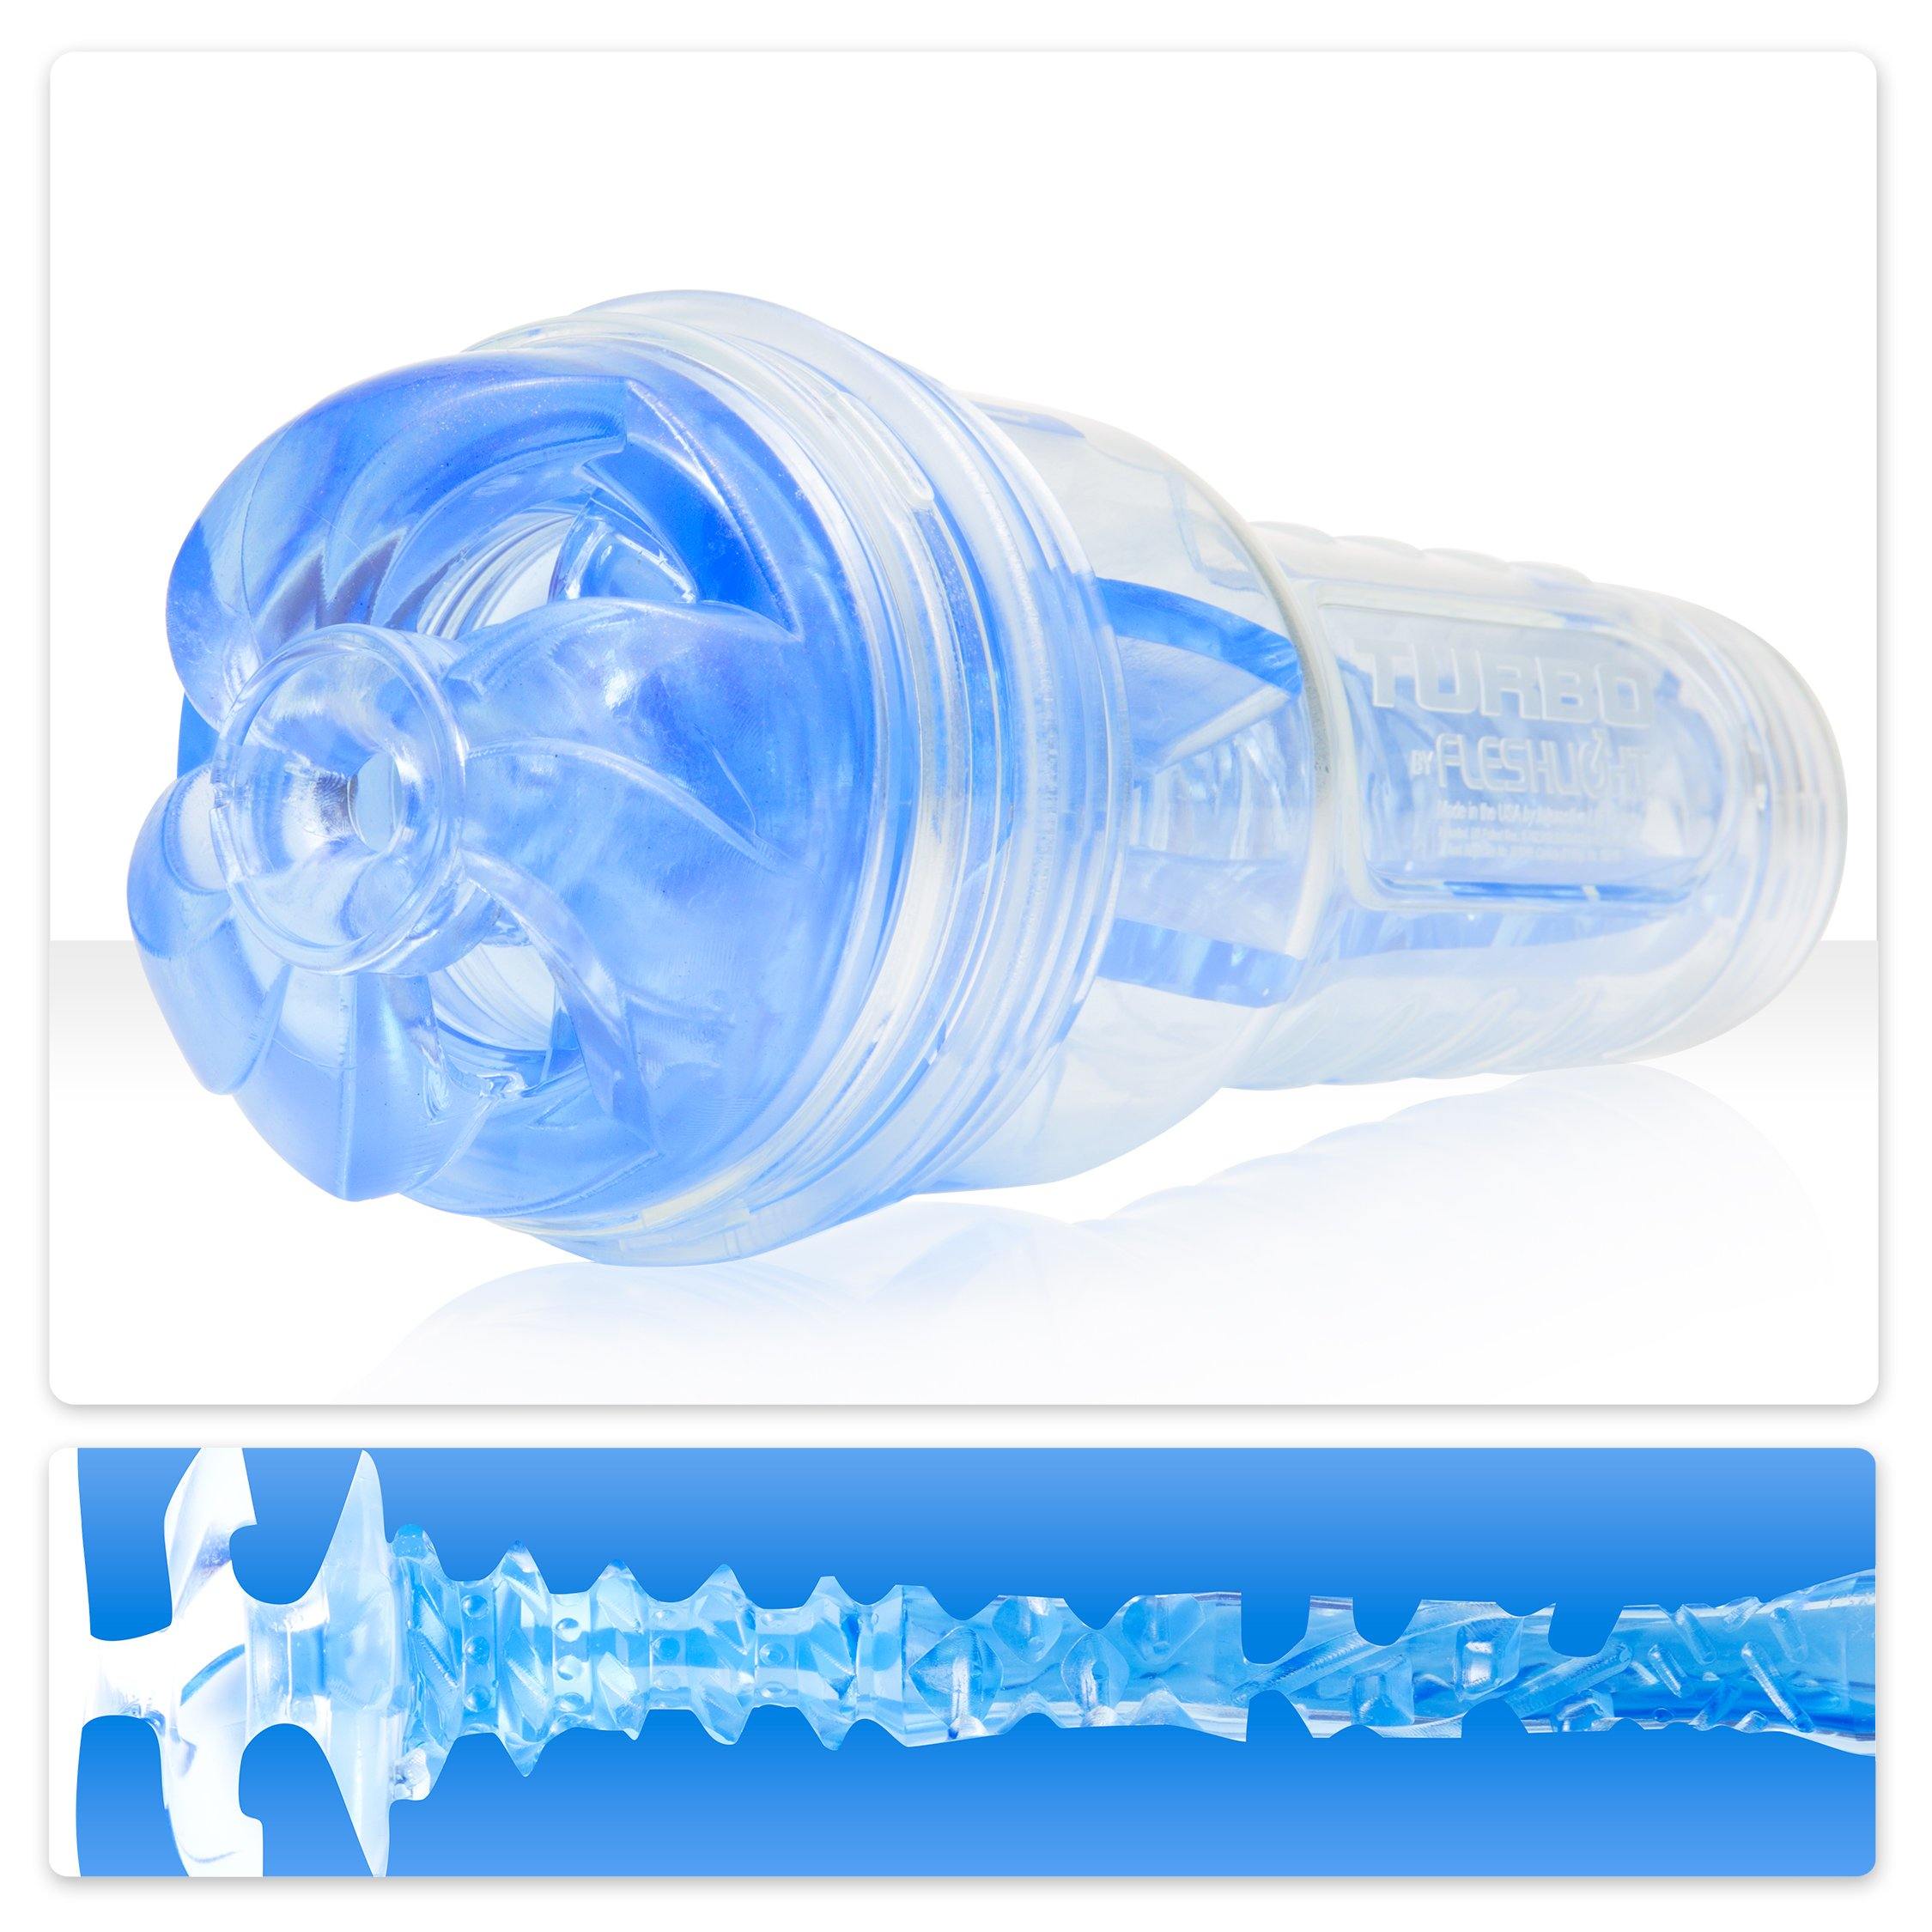 Fleshlight Turbo Thrust Blue Ice - Buy At Luxury Toy X - Free 3-Day Shipping